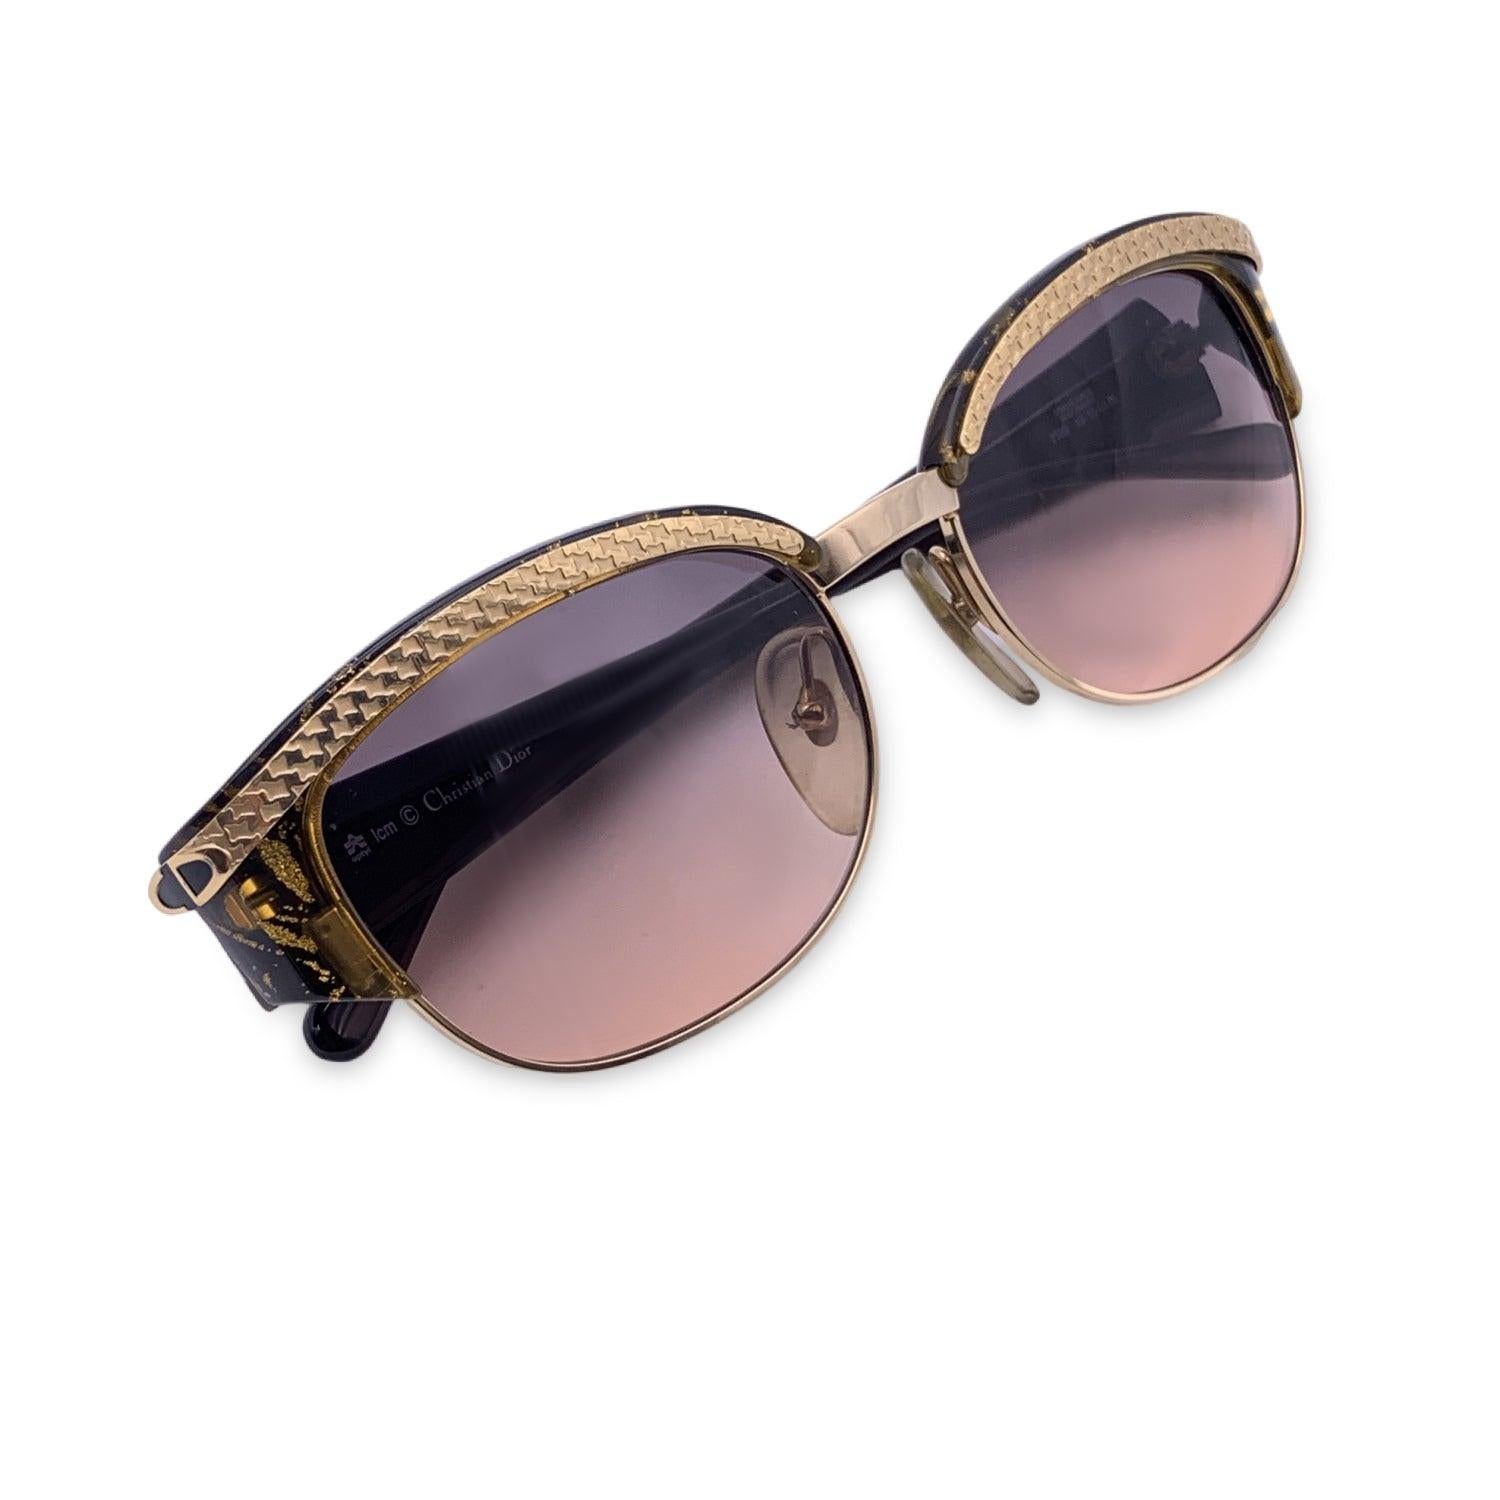 Vintage Christian Dior Sunglasses, Mod. 2589 49 - 55/18 - 135mm. Marbled gold and black Opyl Frame, with gold metal finish. Original 100% Total UVA/UVB protection in gradient & bi-color lenses. CD logo on temples. Details MATERIAL: Plastic COLOR: